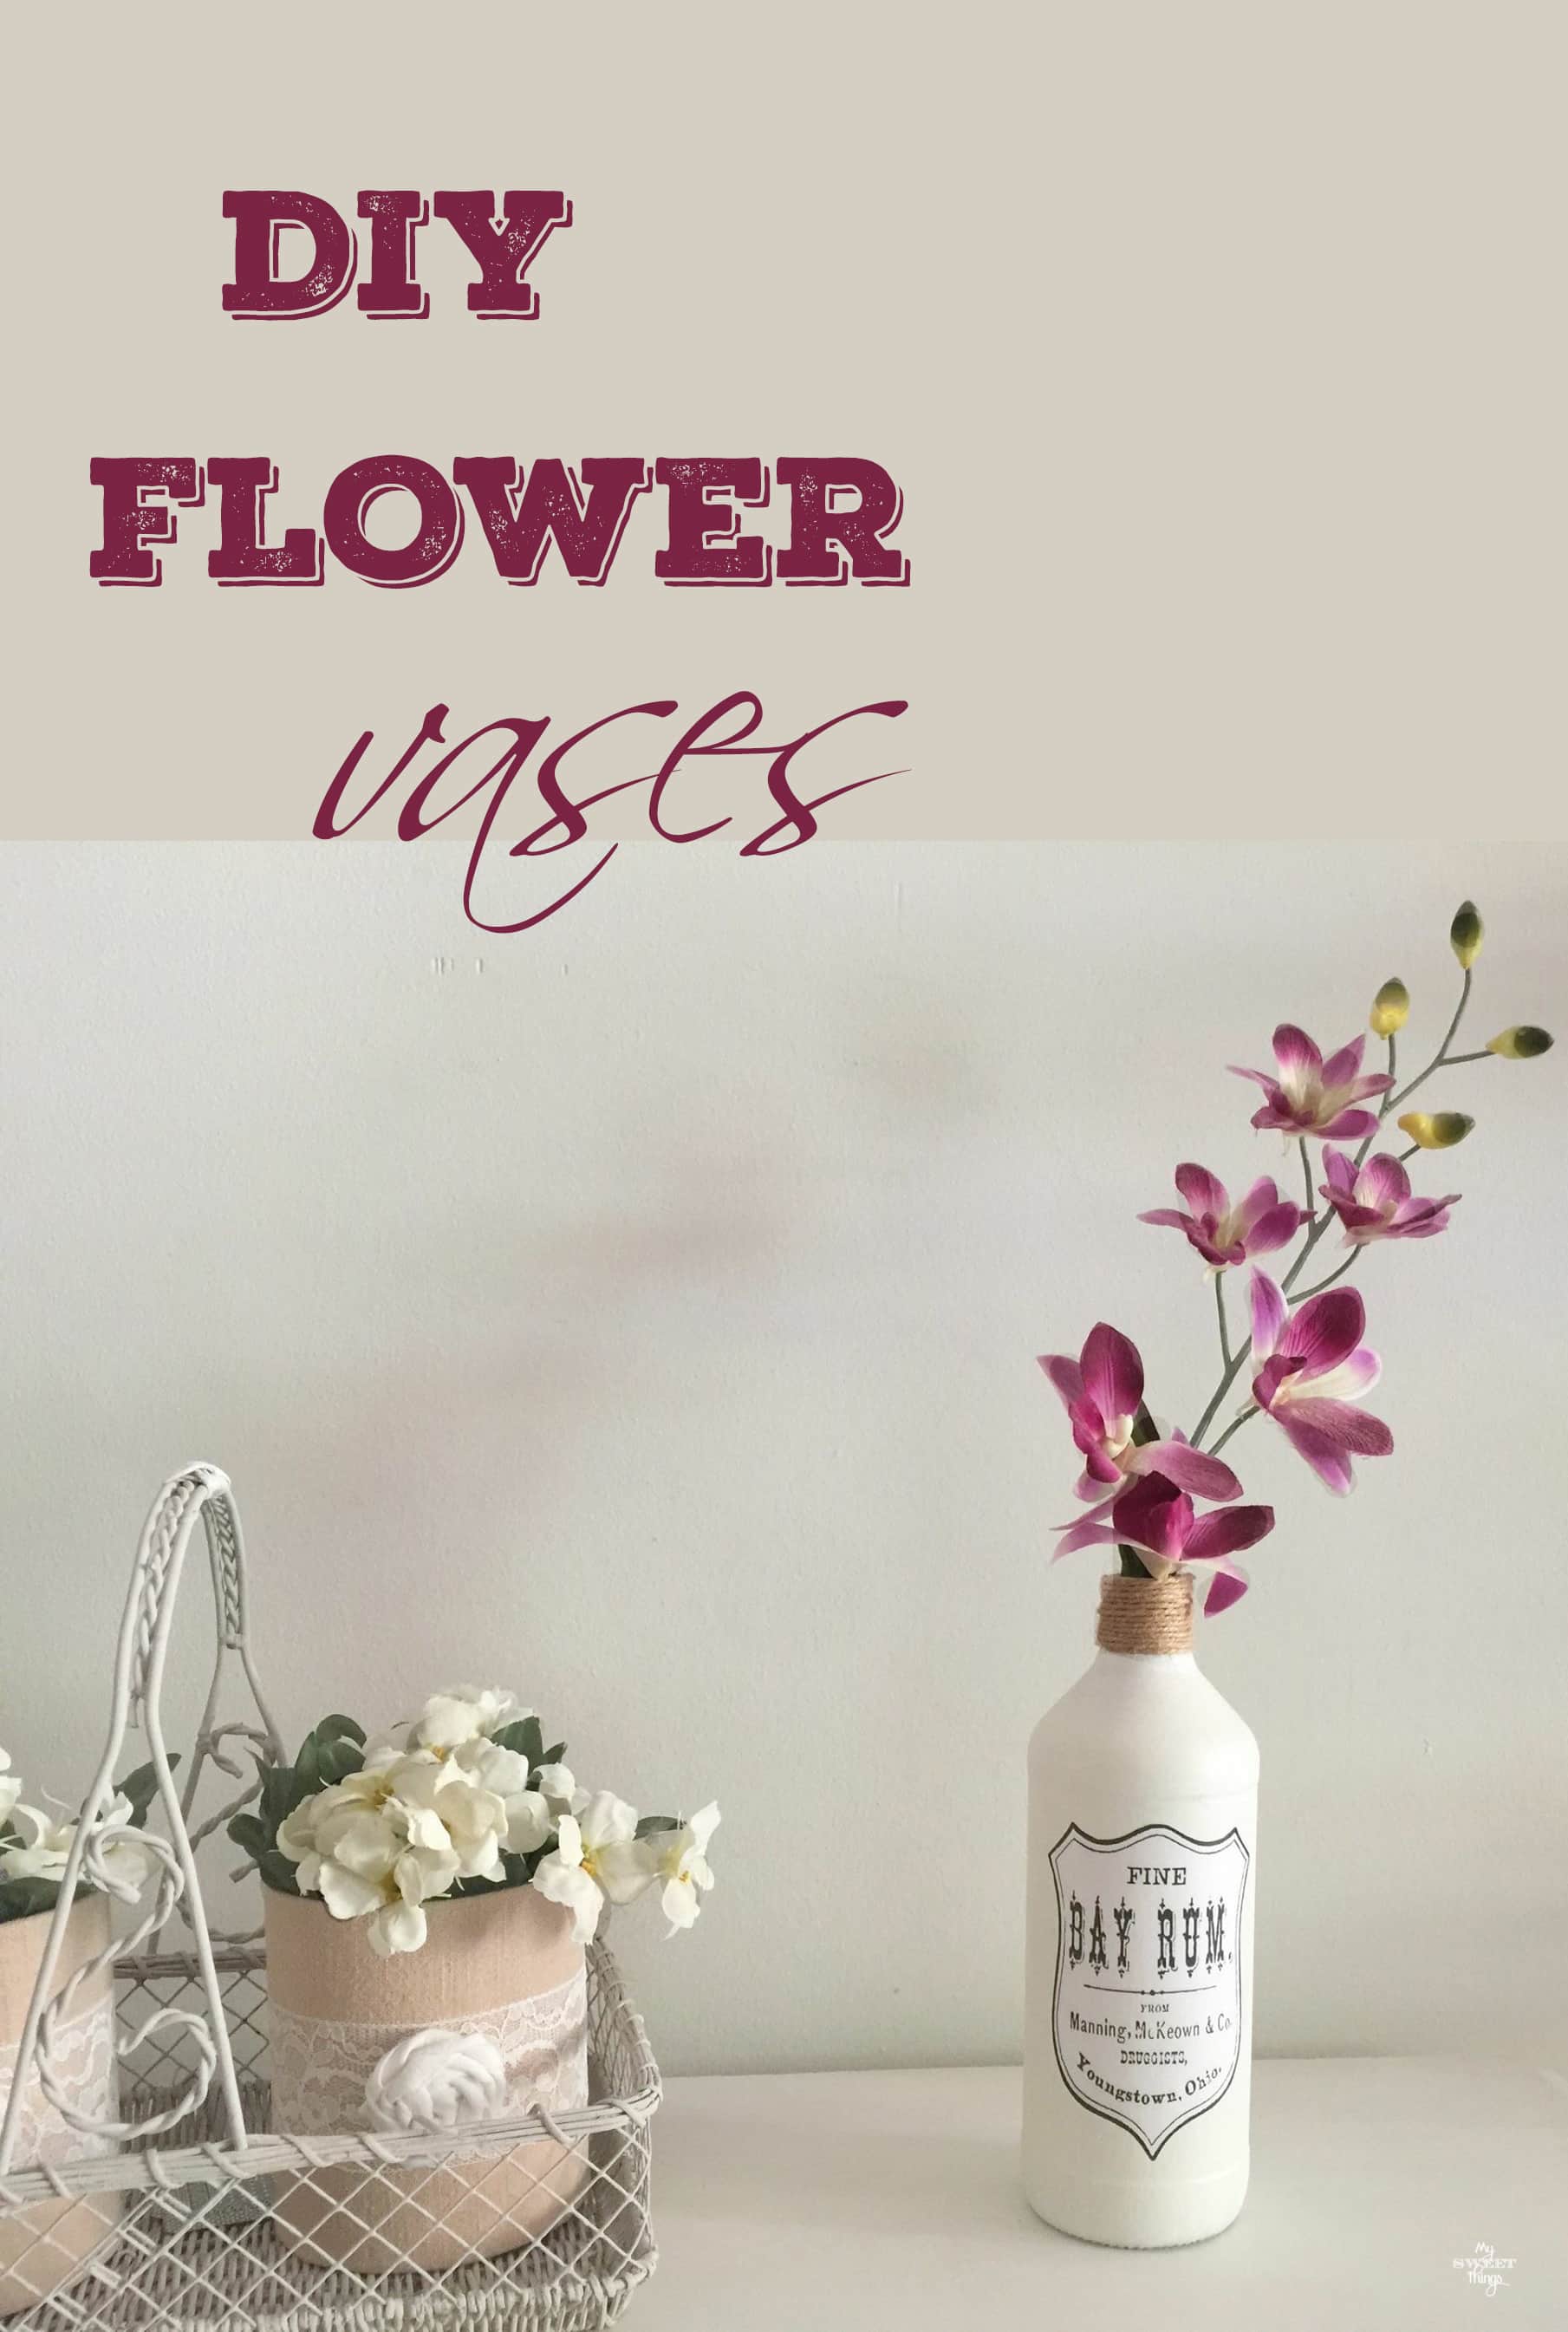 DIY Flower Vases